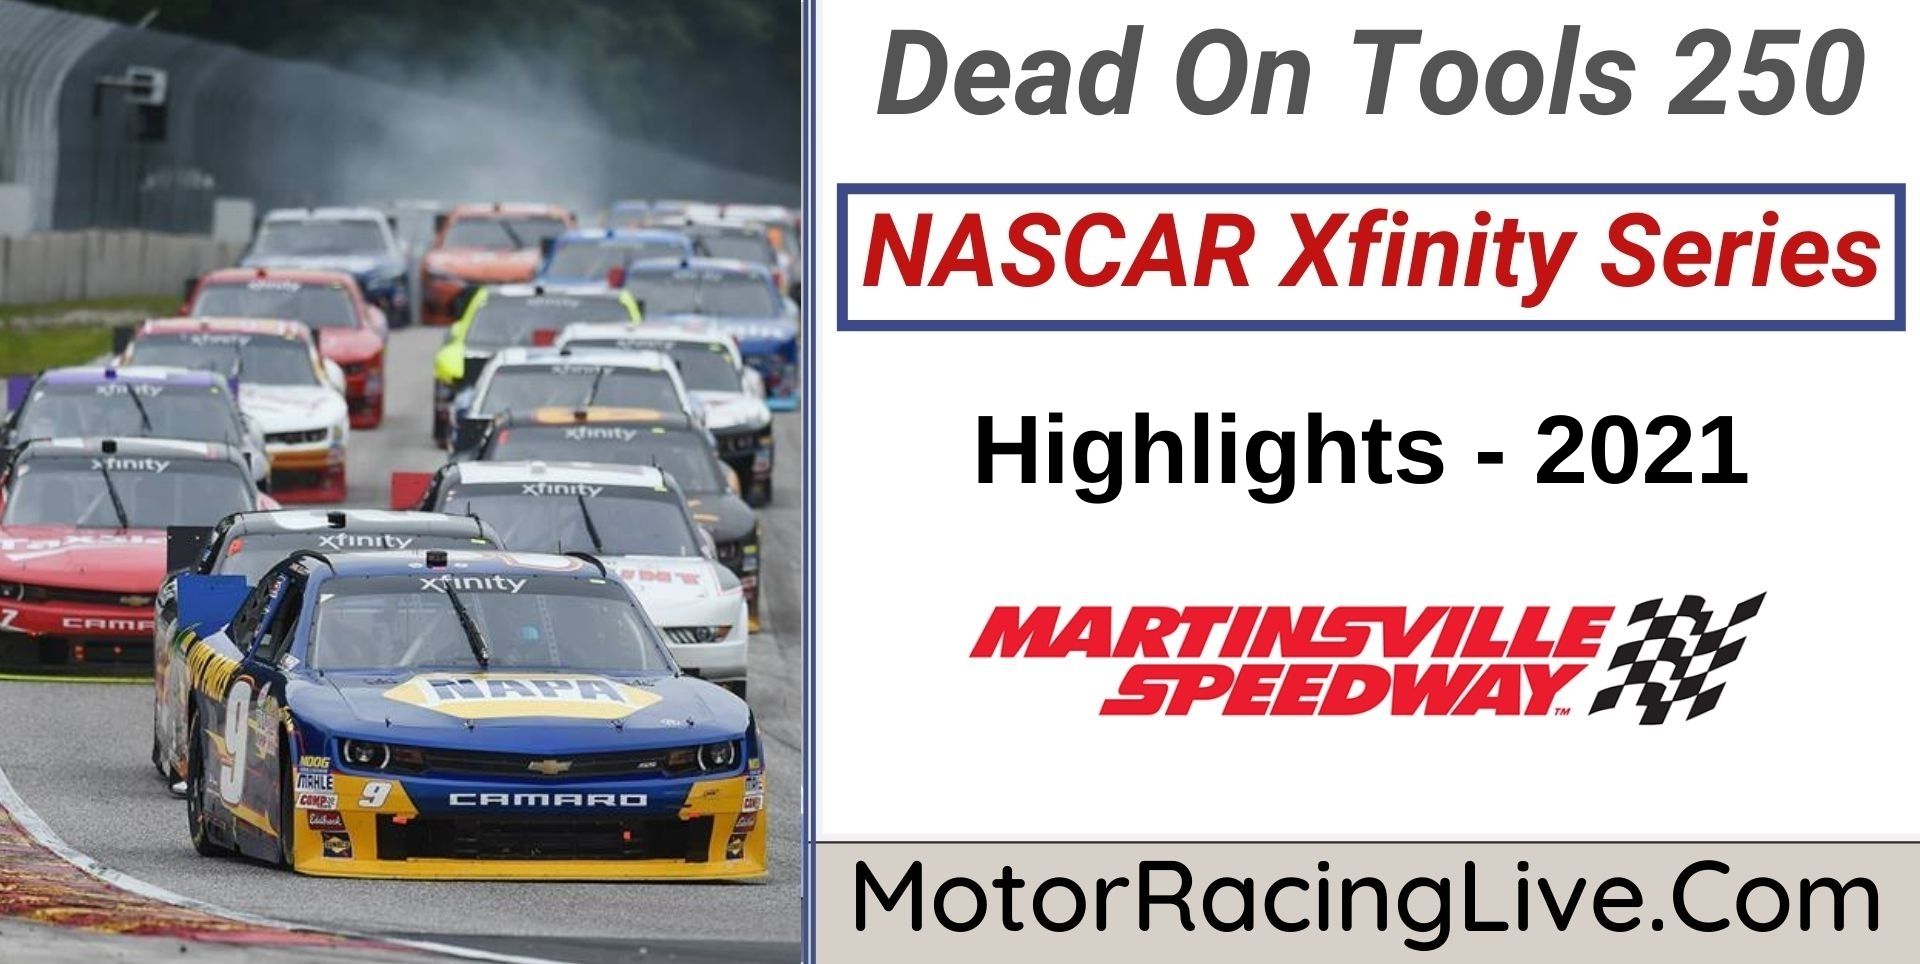 Dead On Tools 250 Highlights 2021 NASCAR Xfinity Series